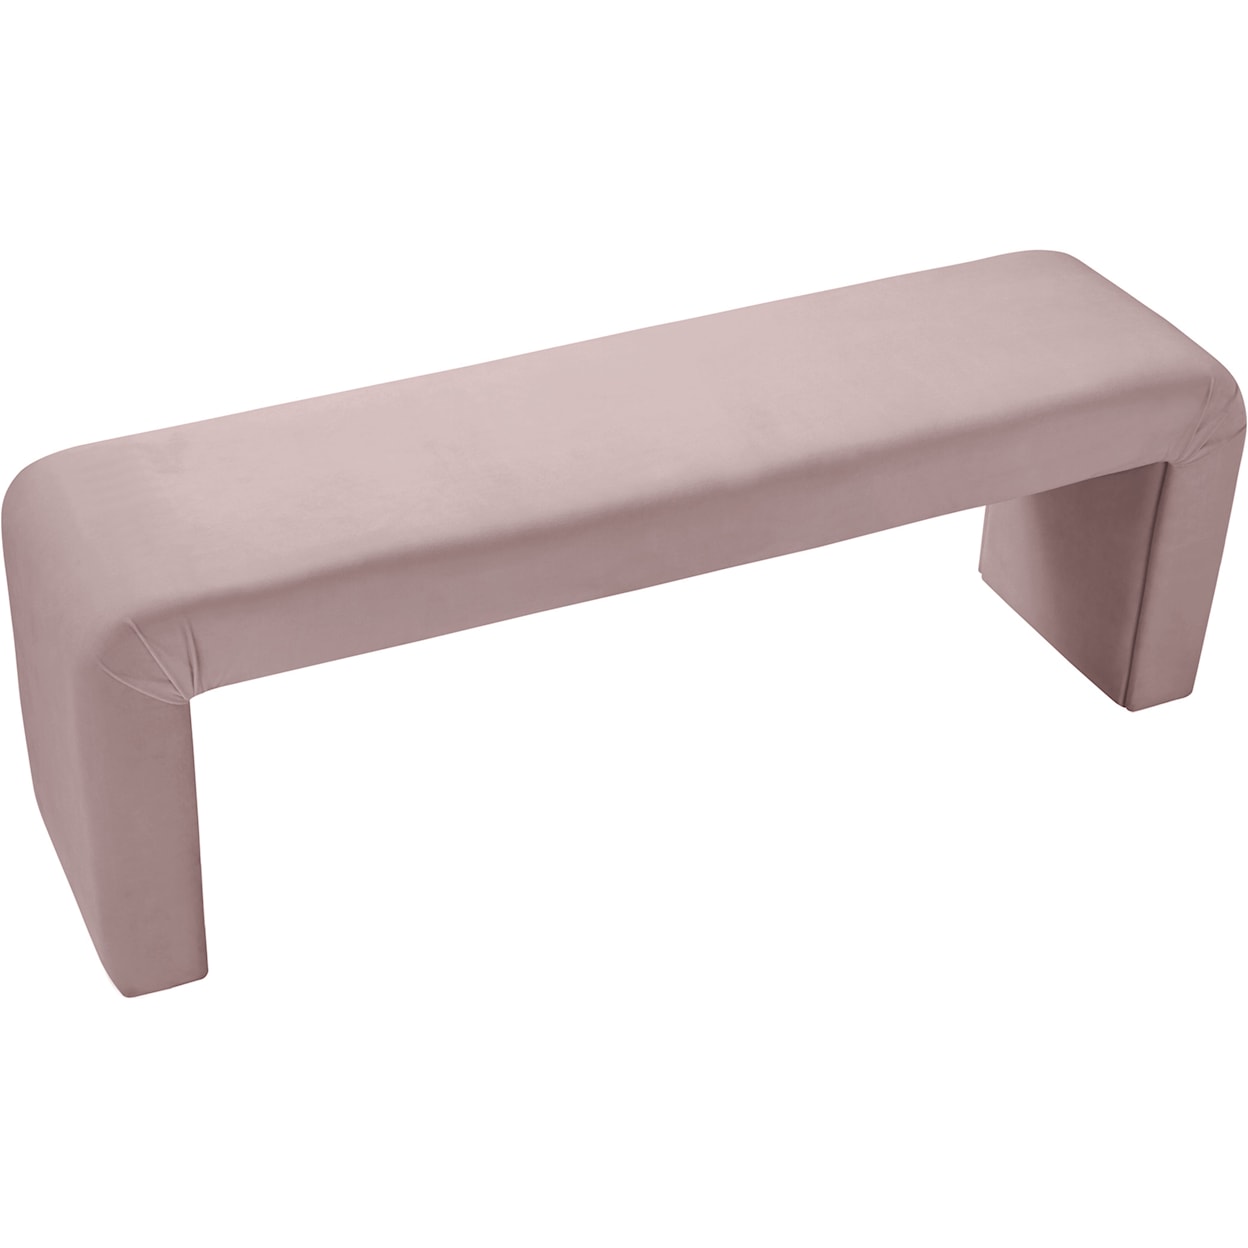 Meridian Furniture Minimalist Bench